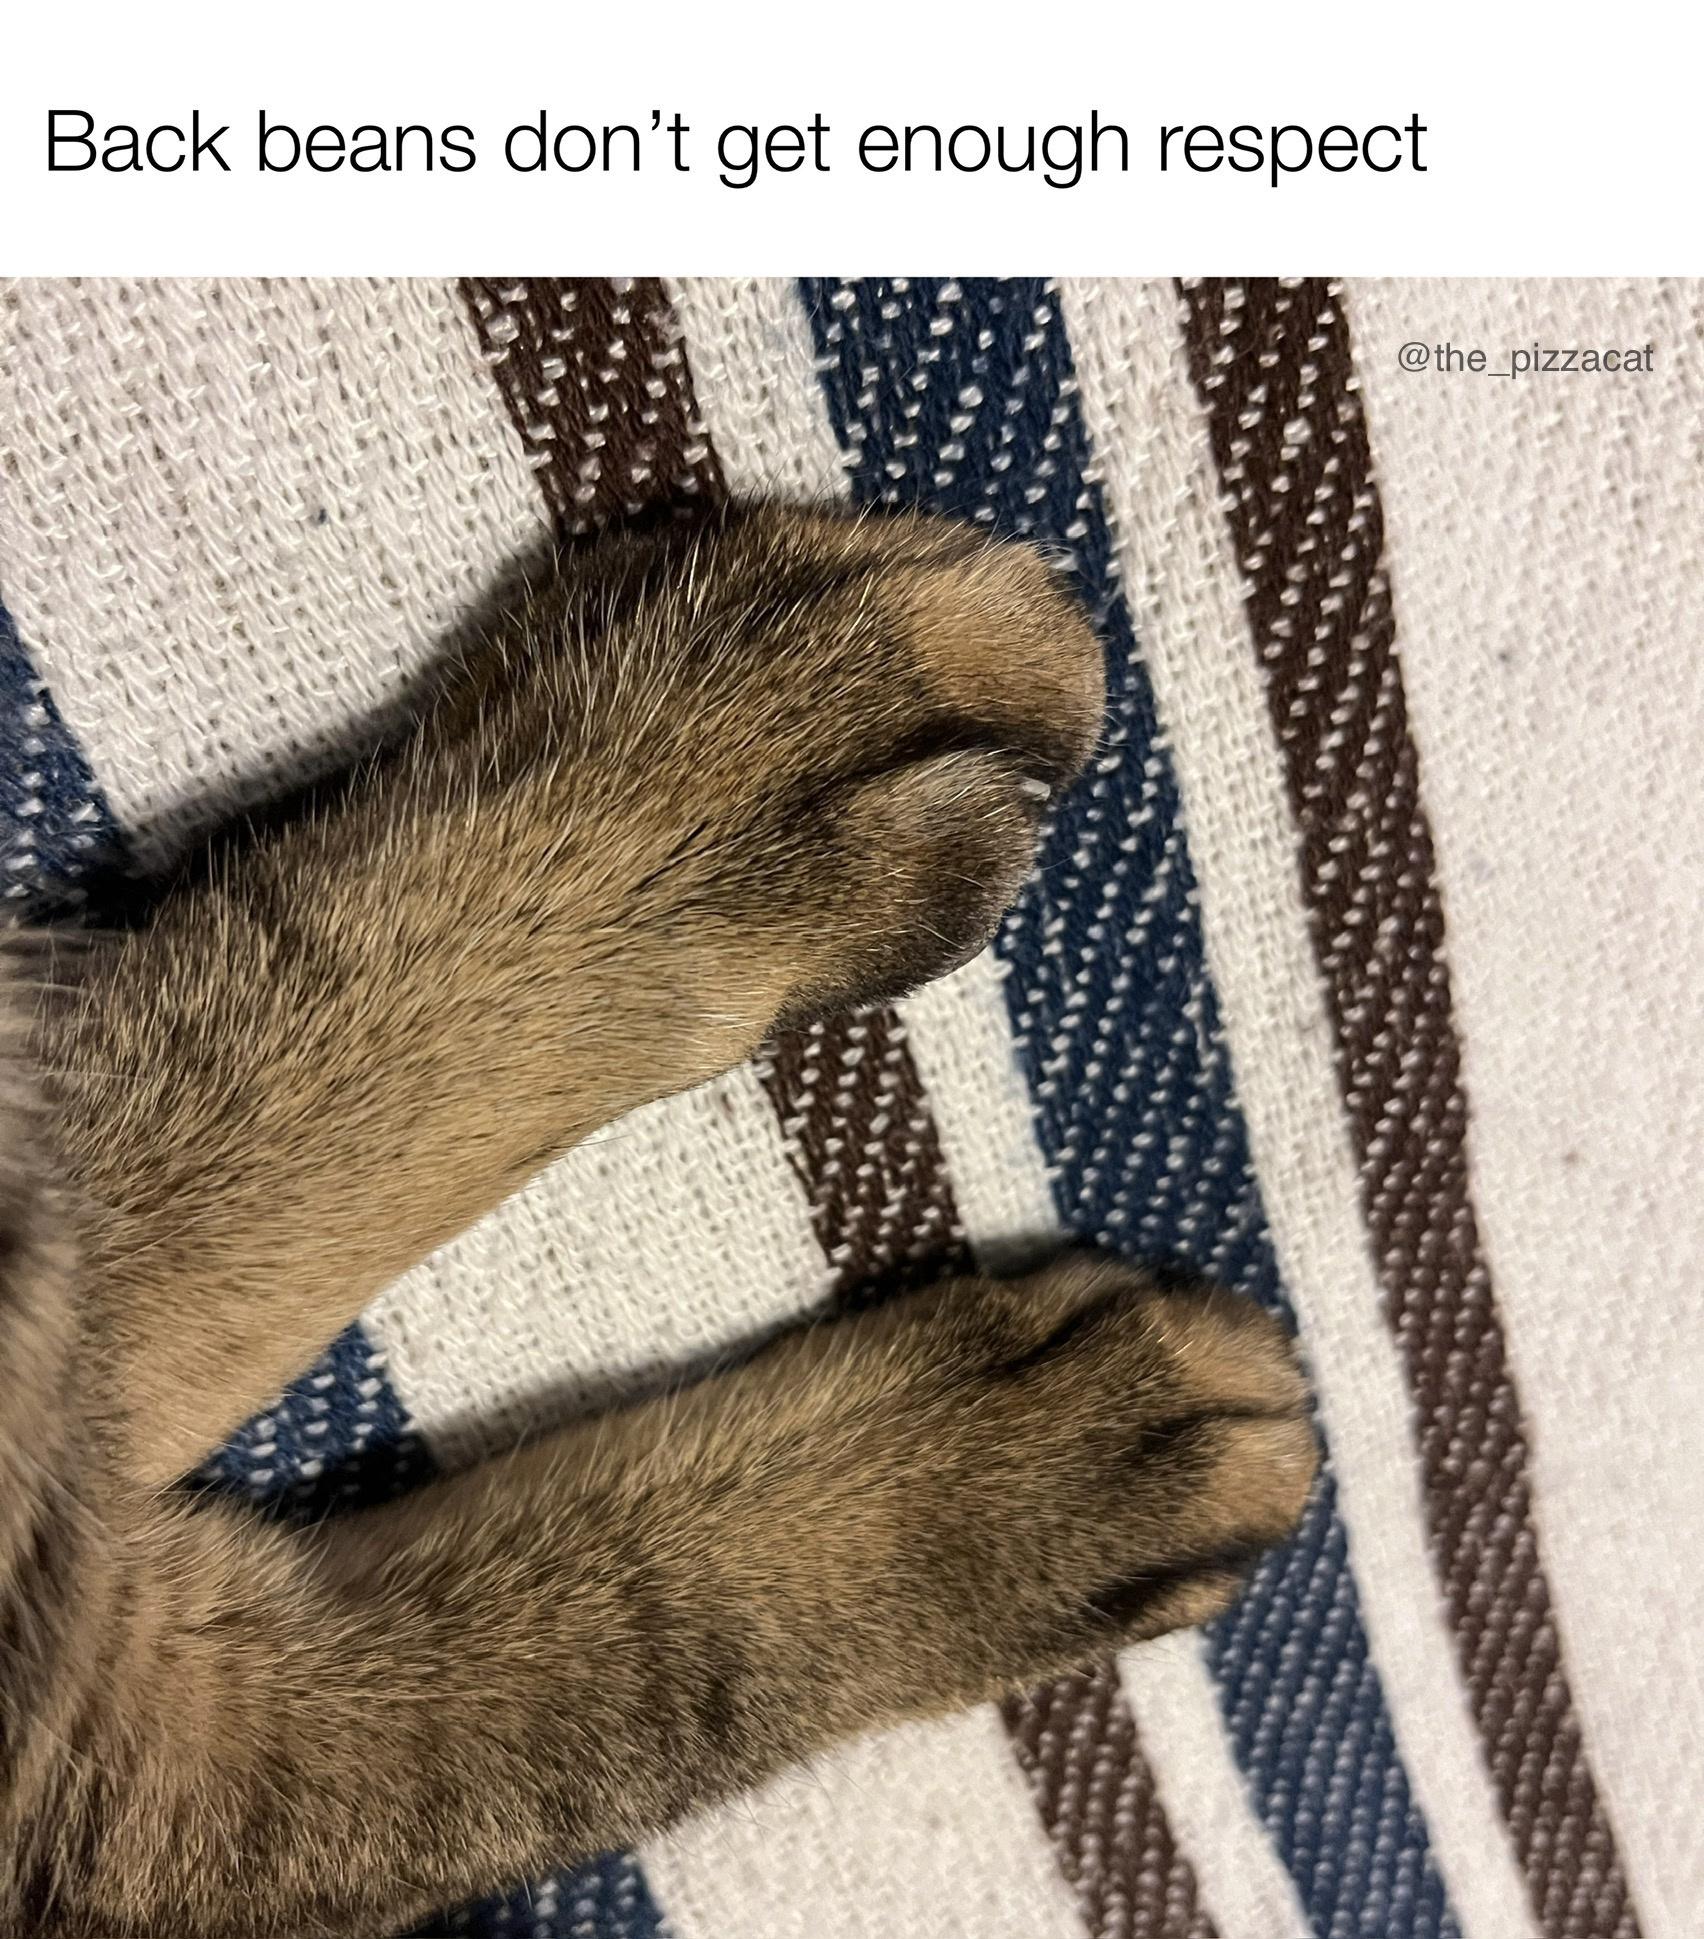 Appreciate abet beans